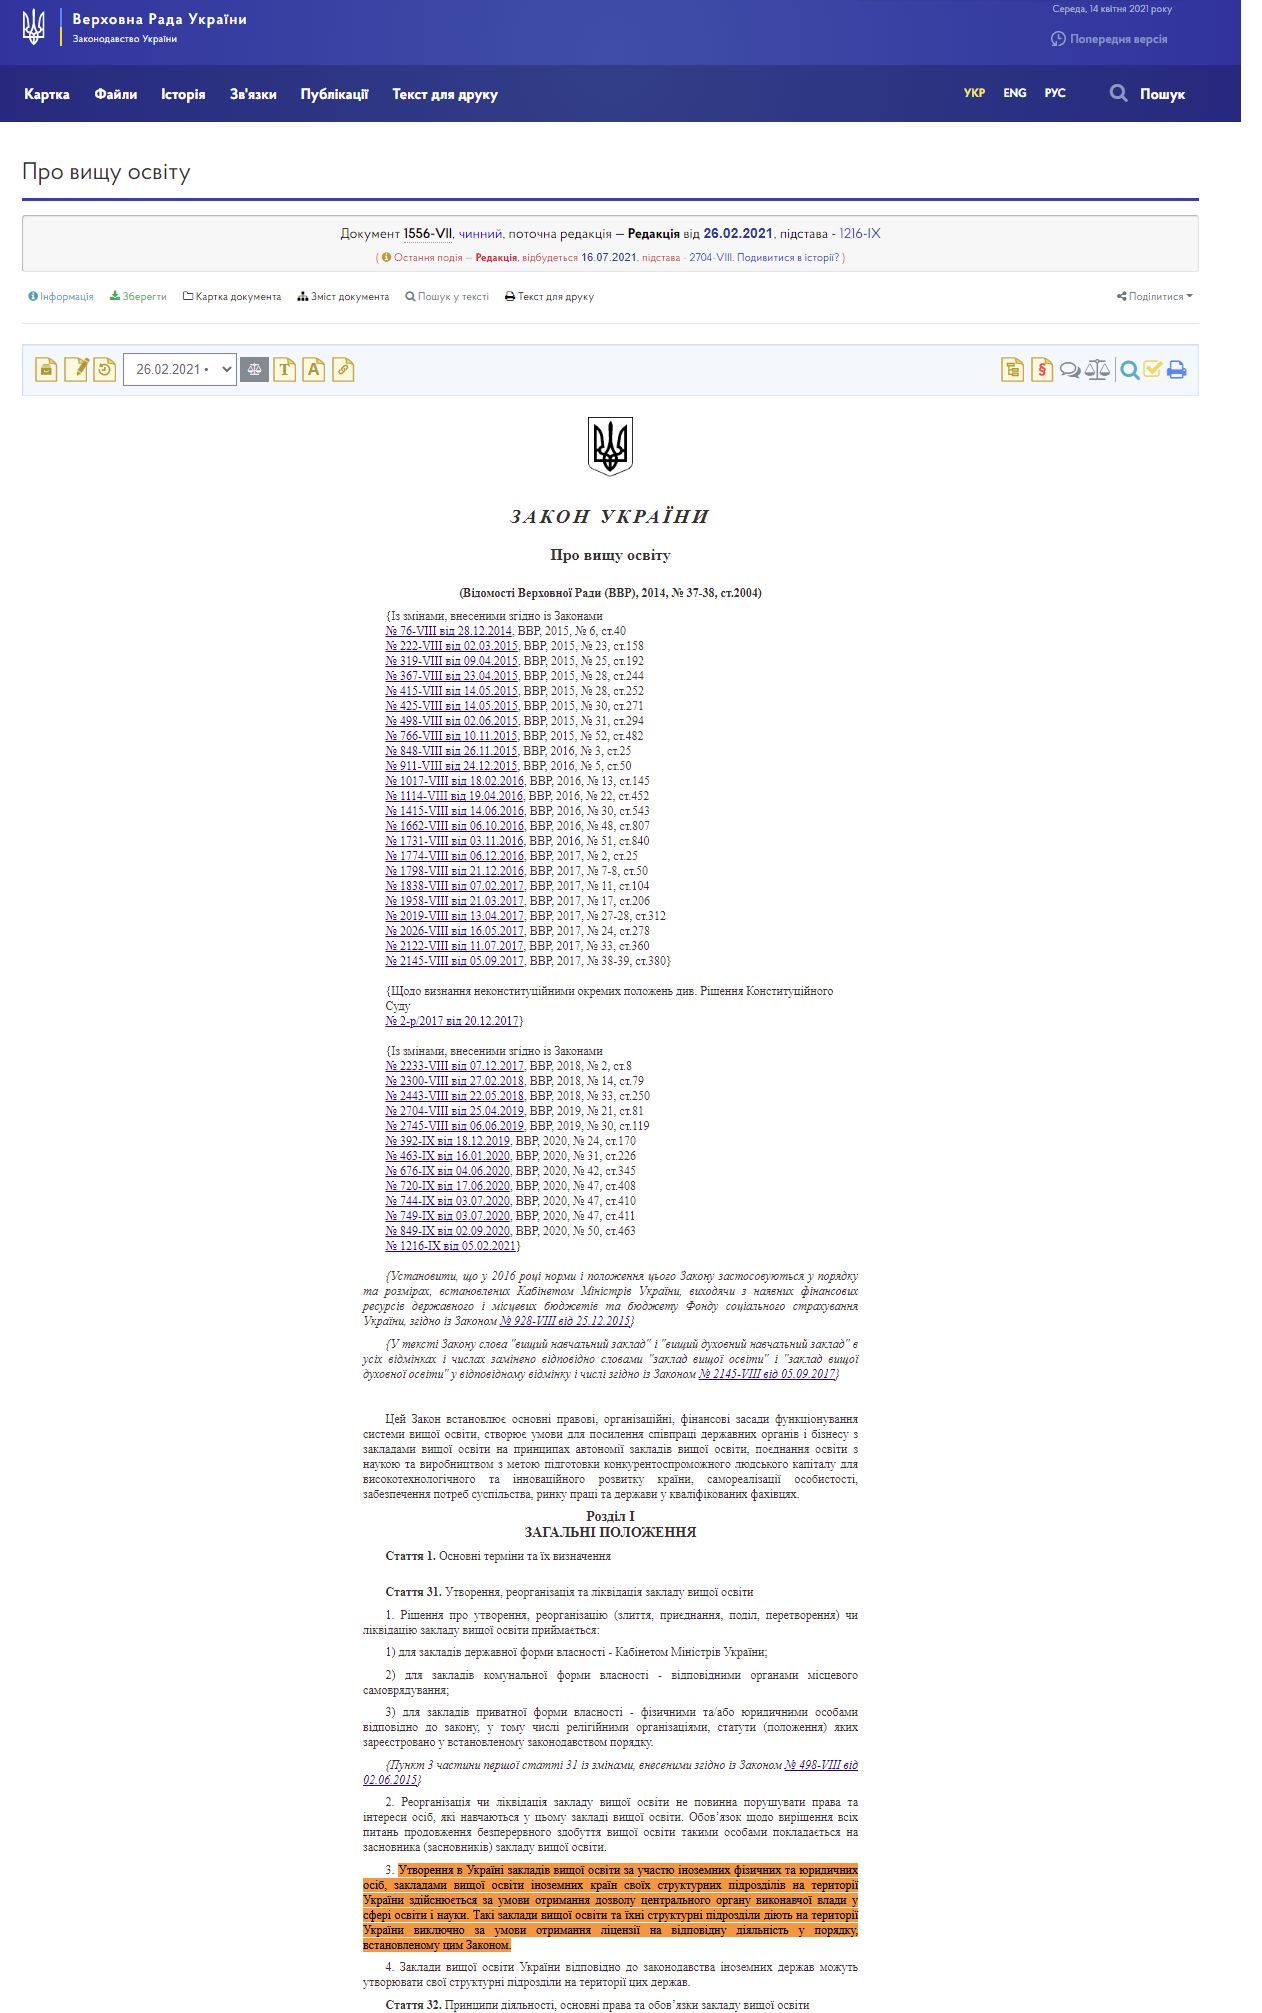 https://zakon.rada.gov.ua/laws/show/1556-18#Text